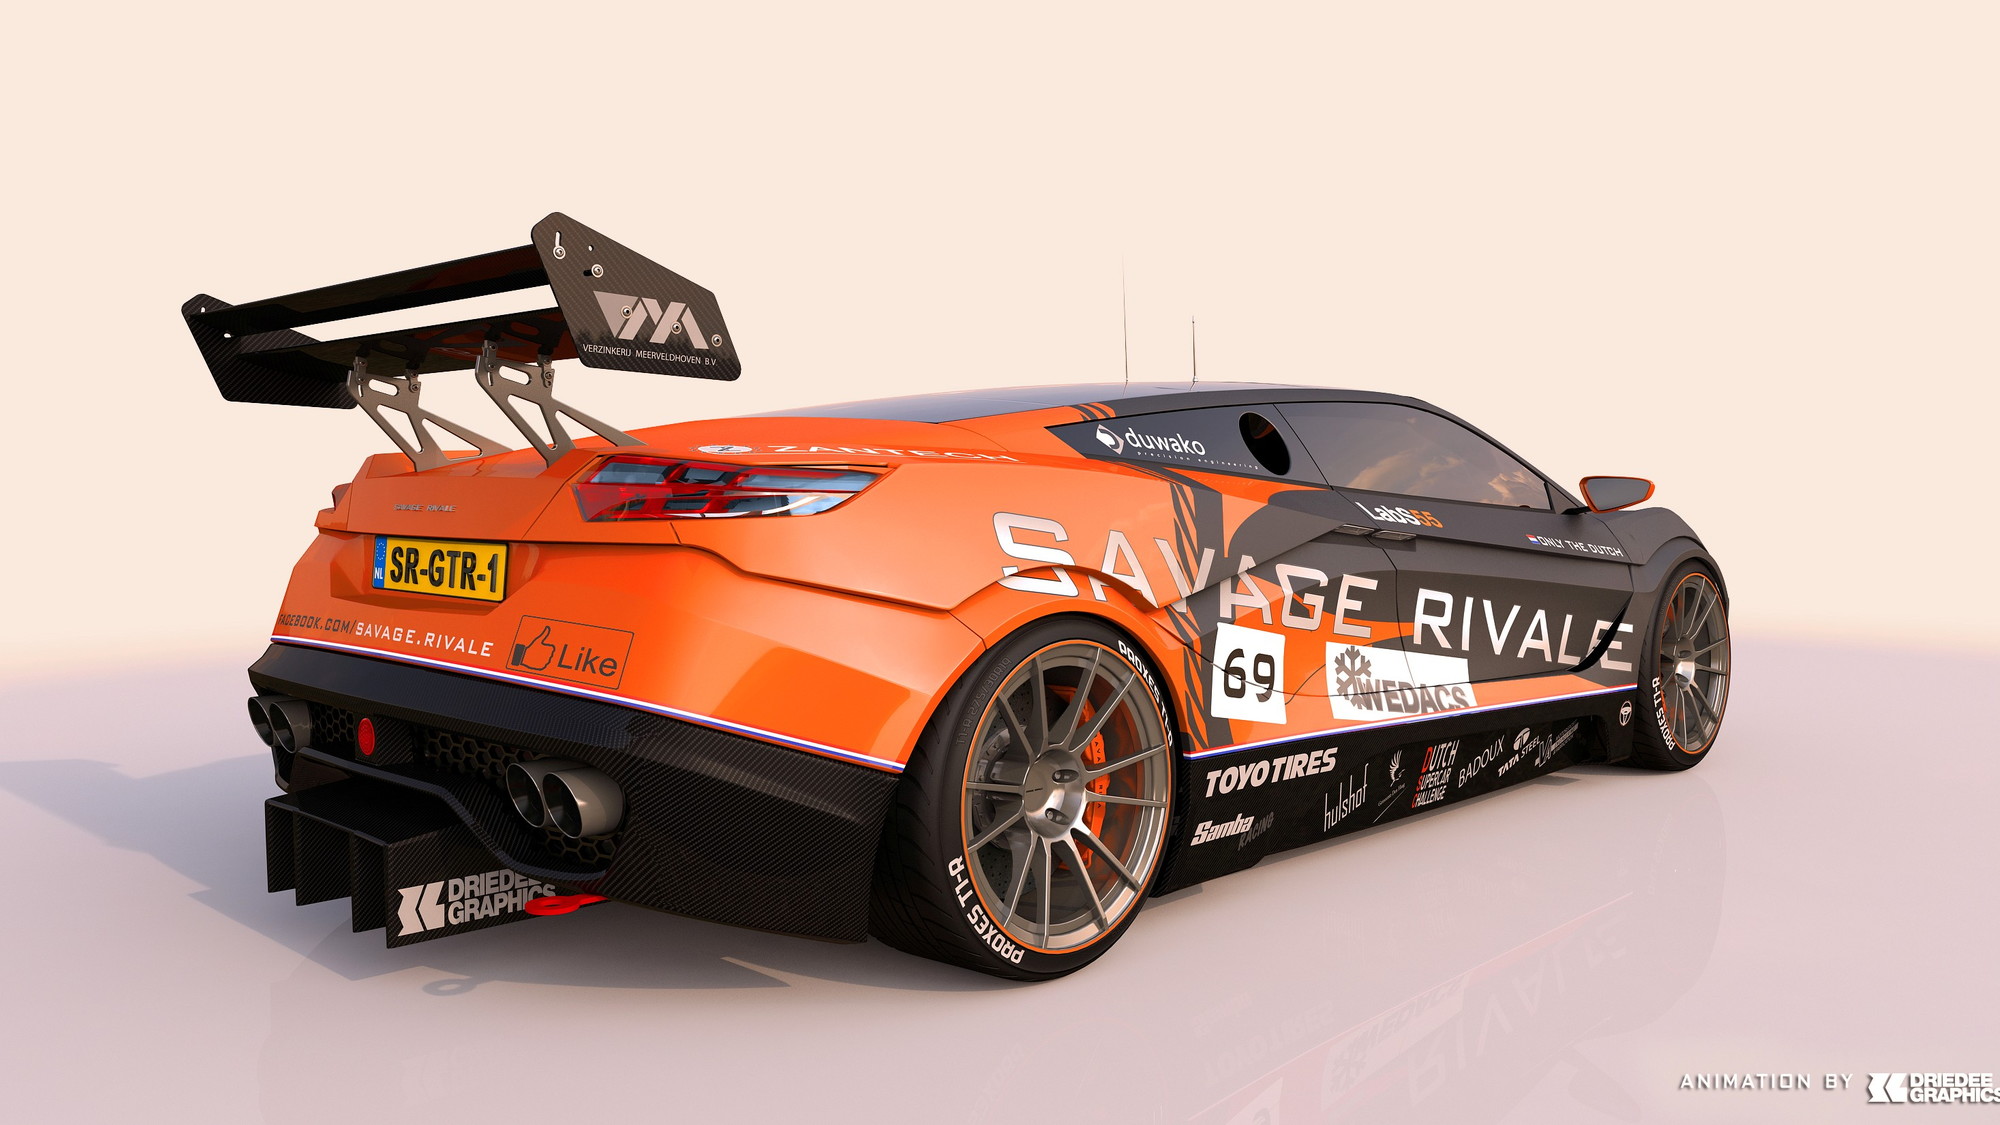 Savage Rivale GTR race car